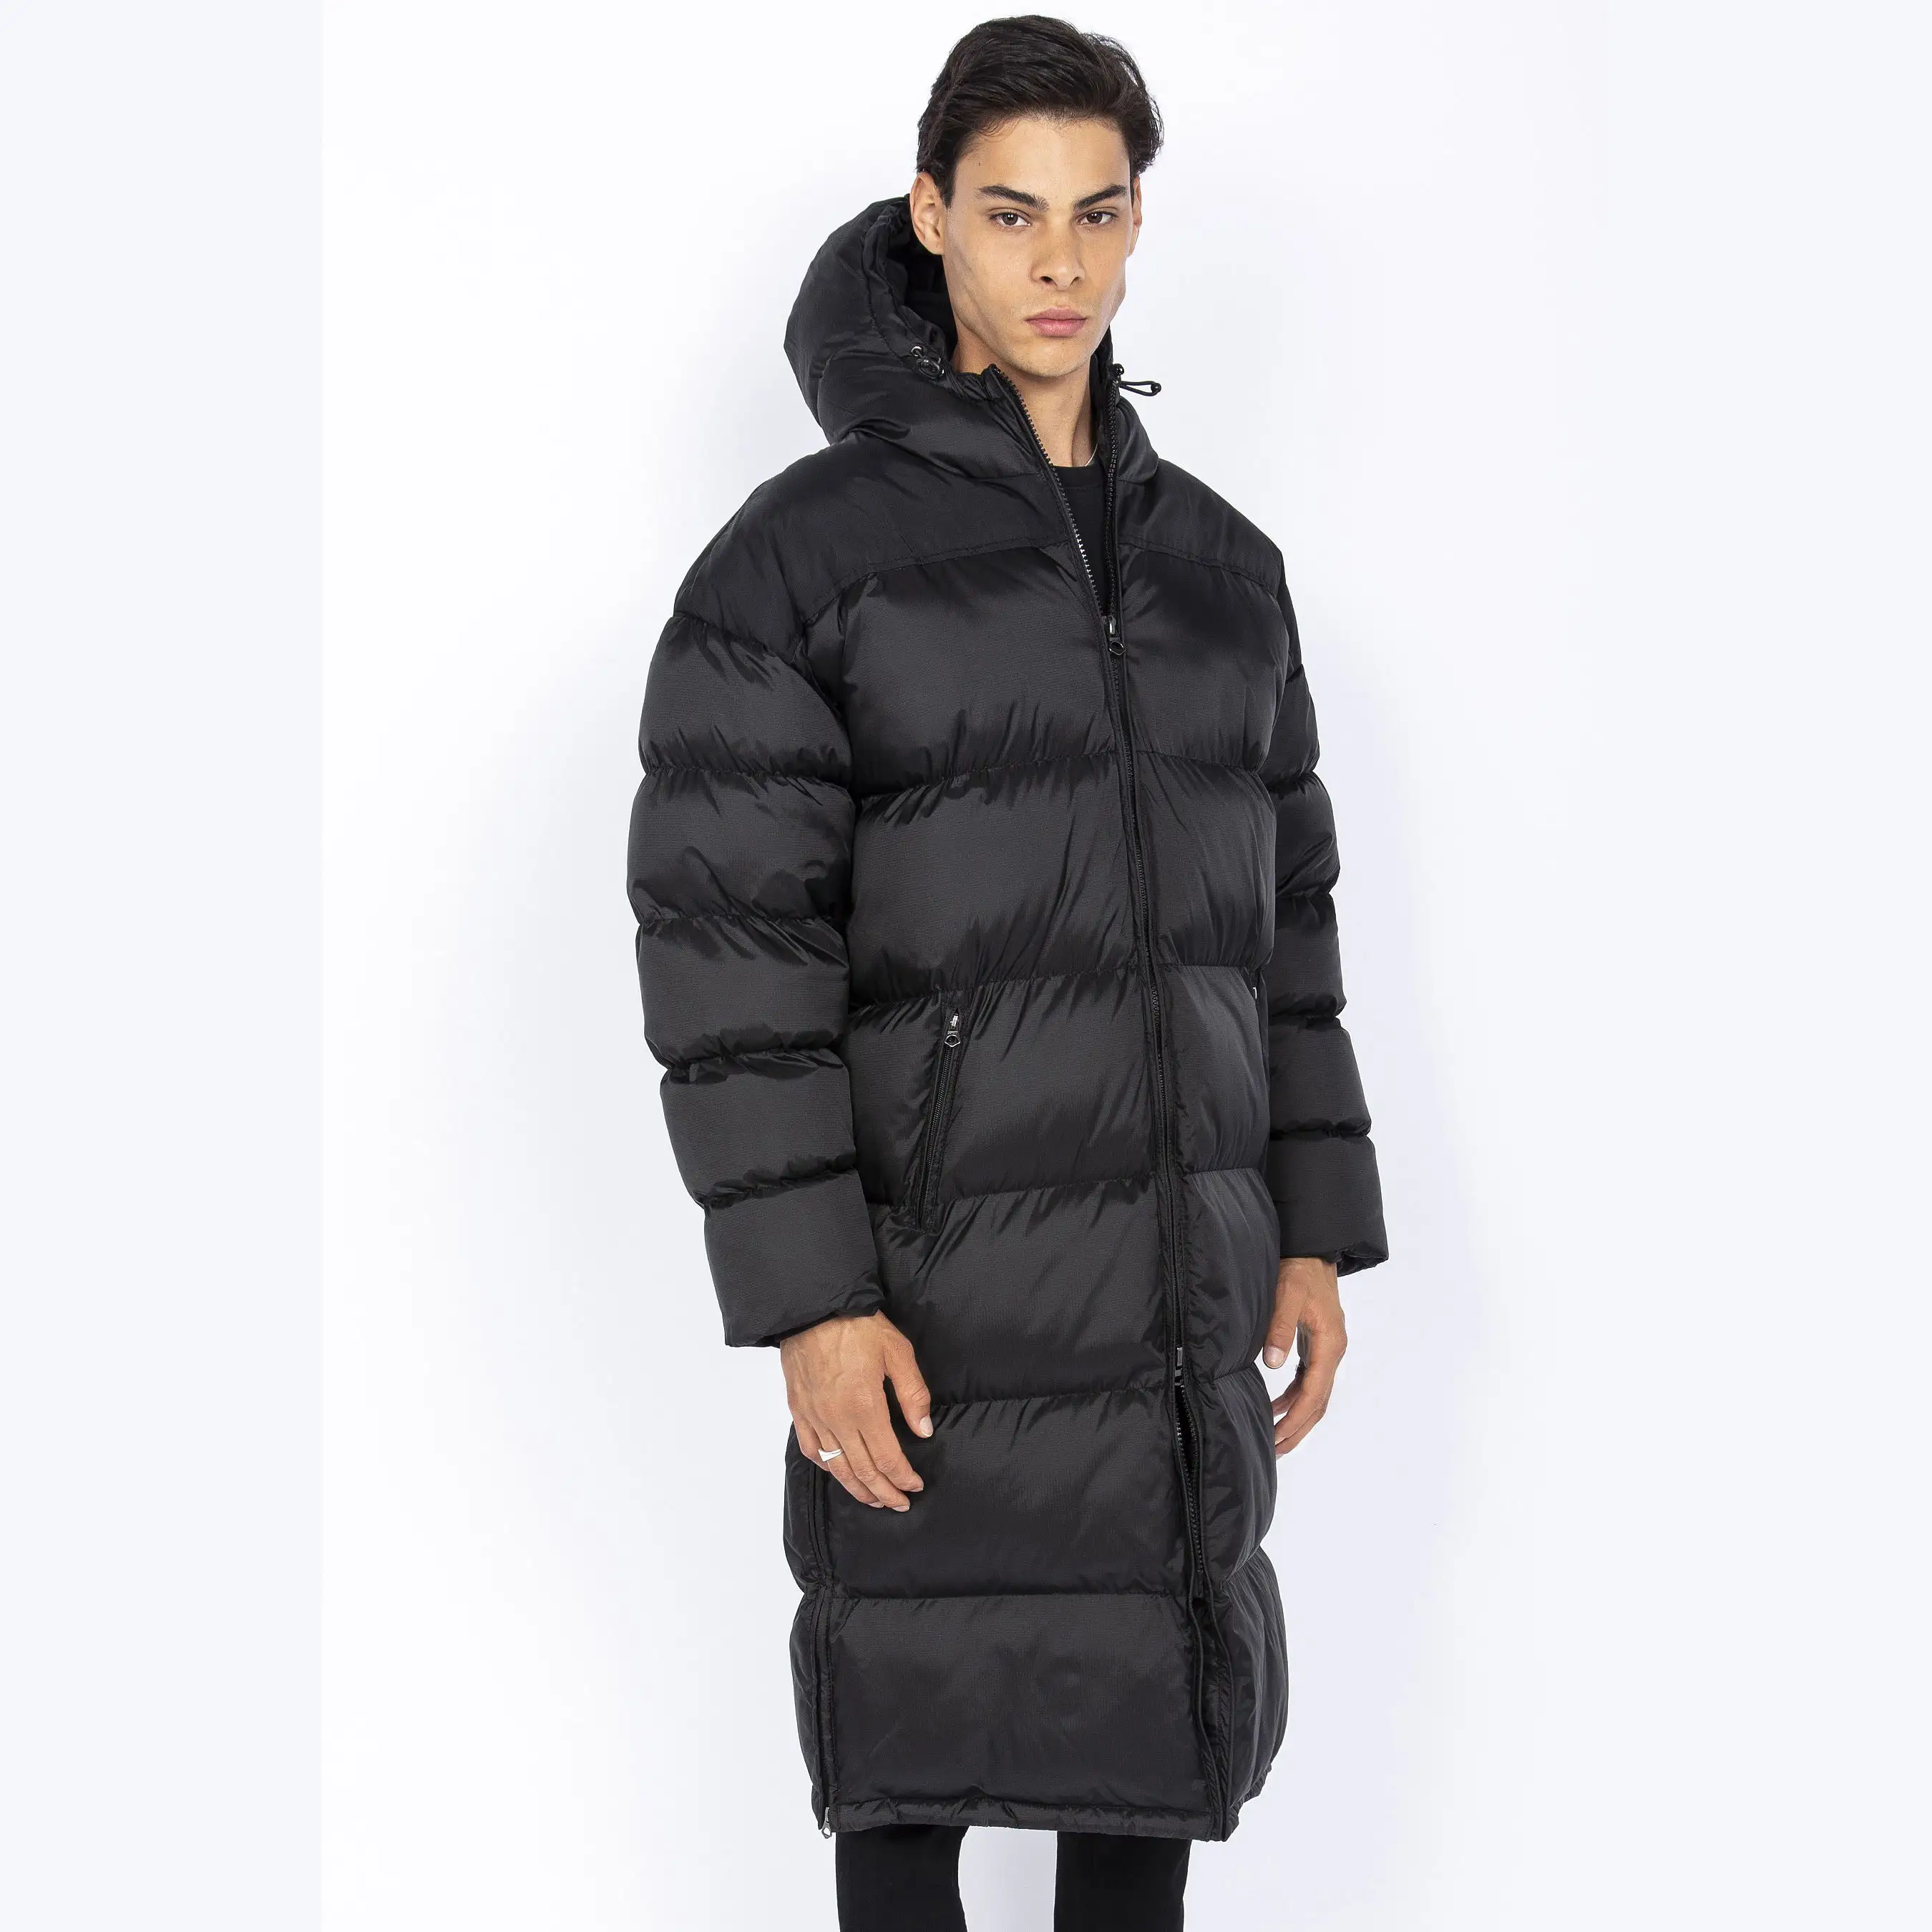 men's long puffer coat with hood jacket